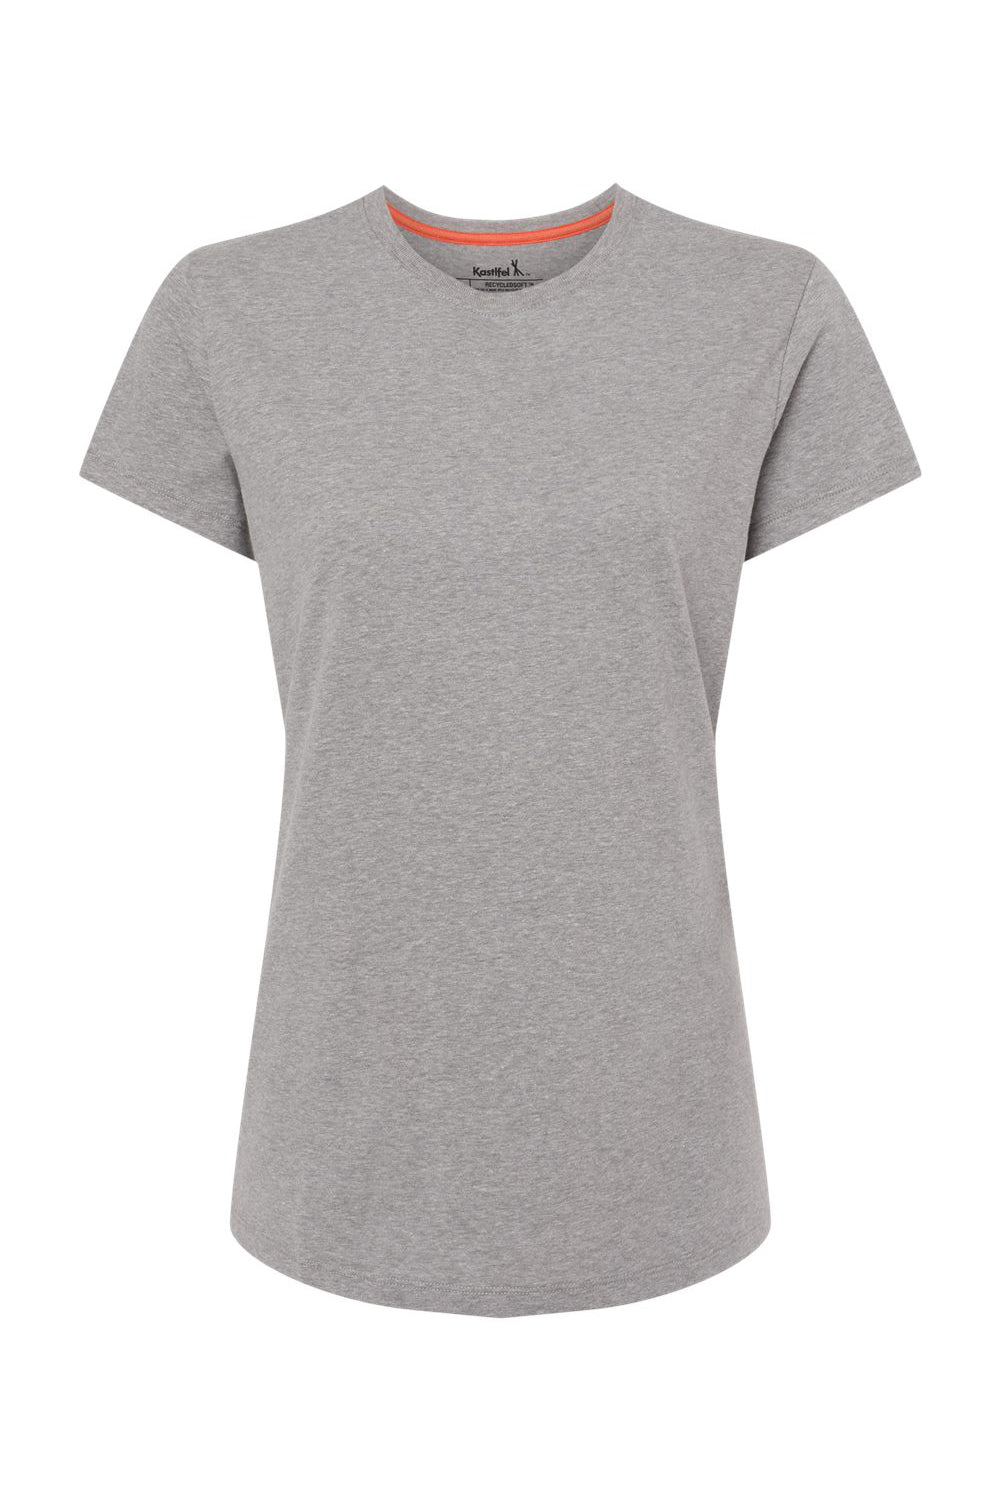 Kastlfel 2021 Womens RecycledSoft Short Sleeve Crewneck T-Shirt Steel Grey Flat Front